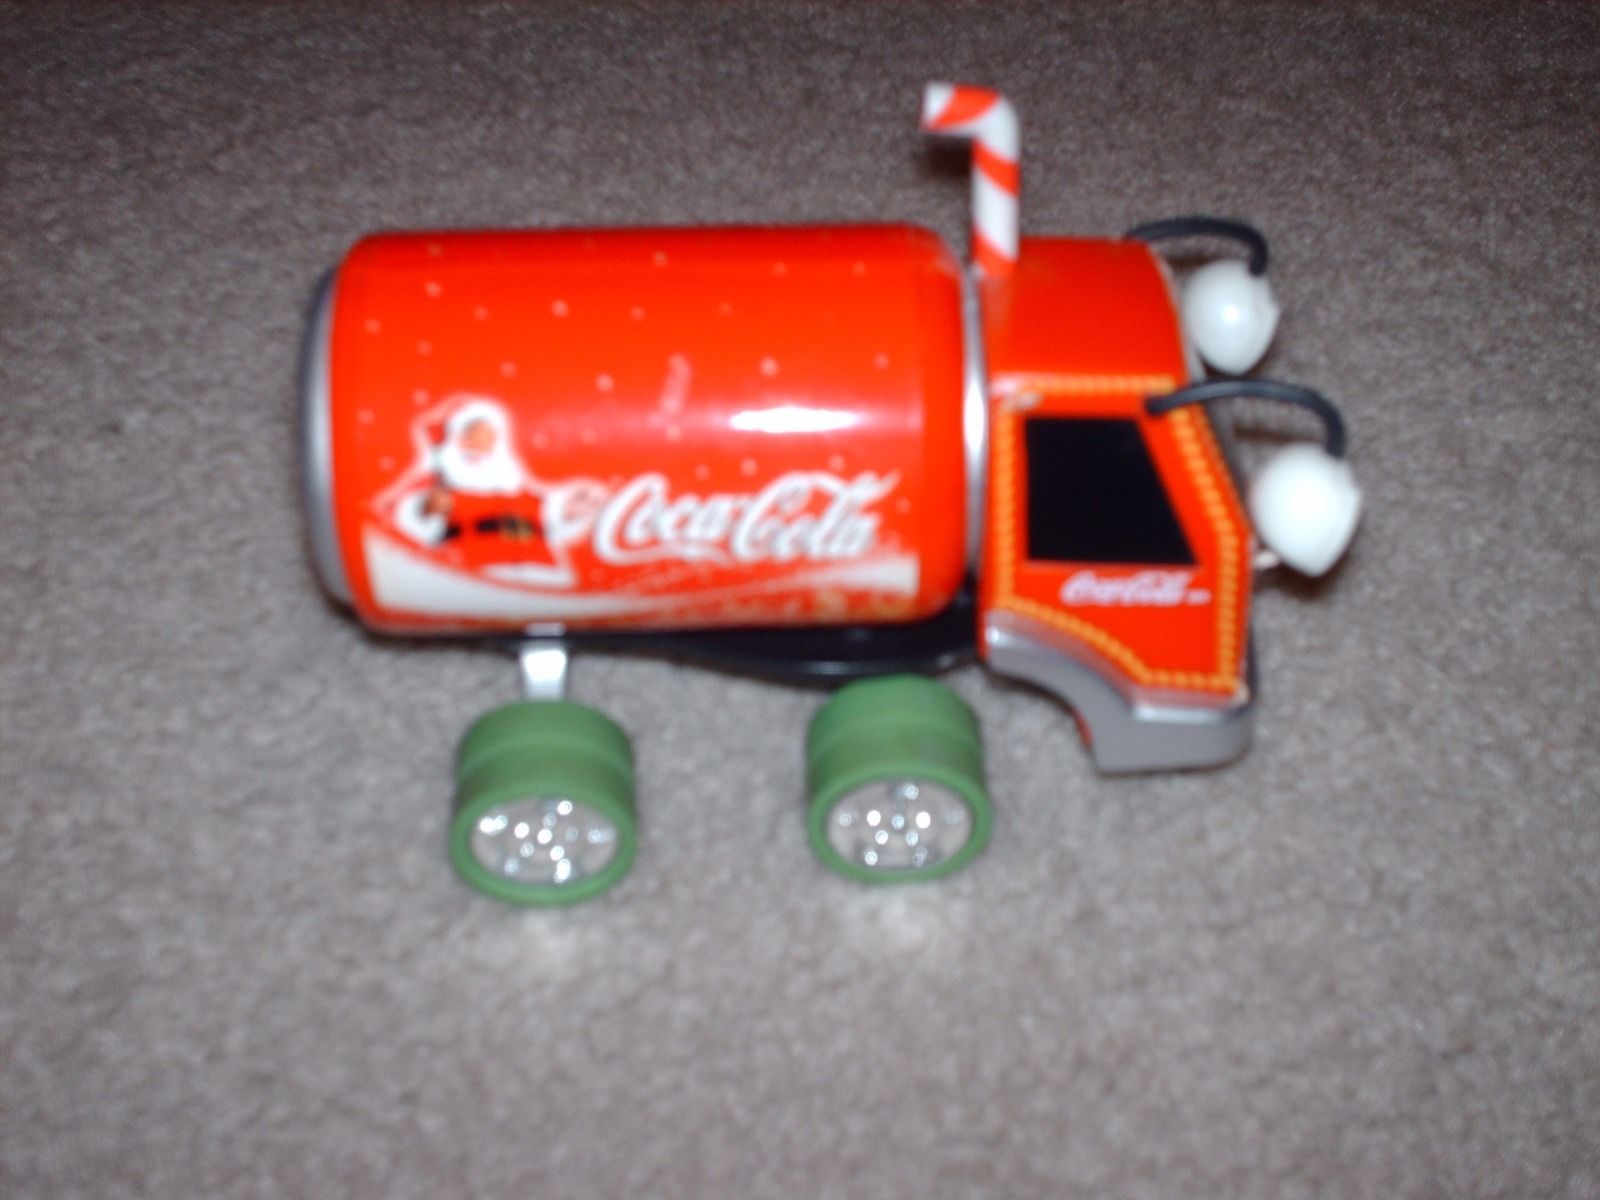 Coca-Cola 2005 Caravana Truck Christmas Theme Santa Claus - $24.99